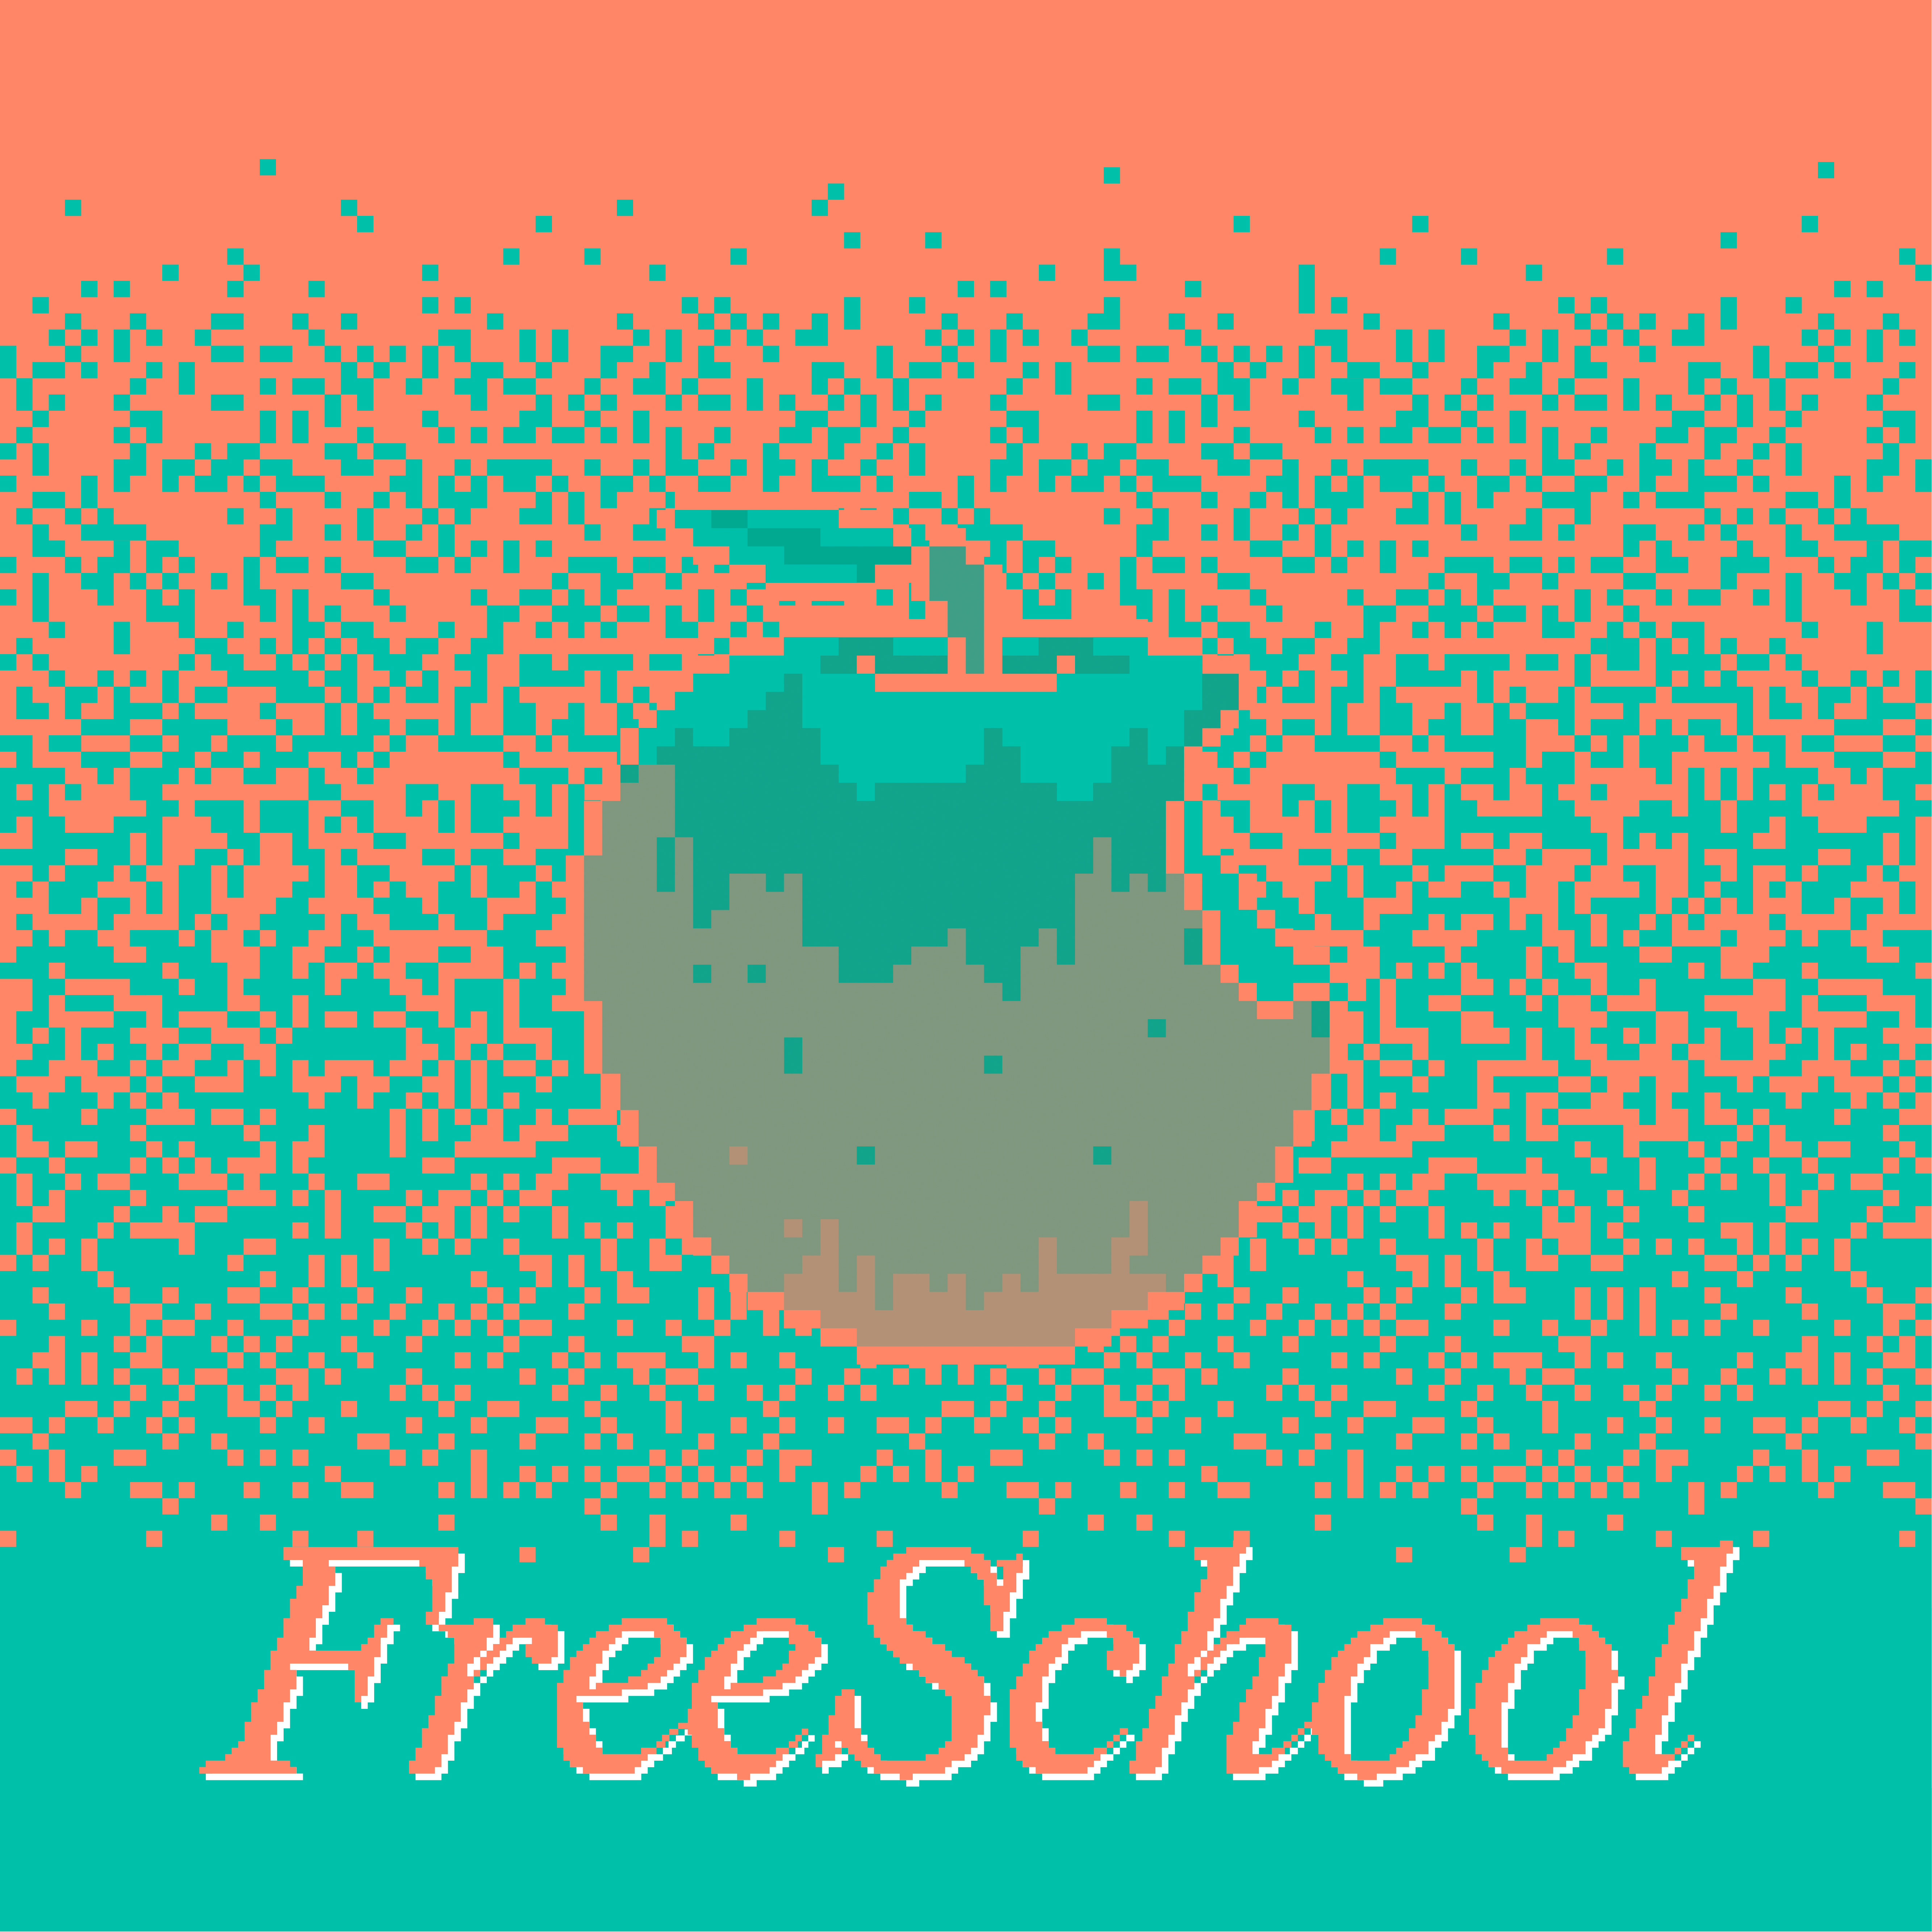 Free School Social Media Graphic Orange Teal